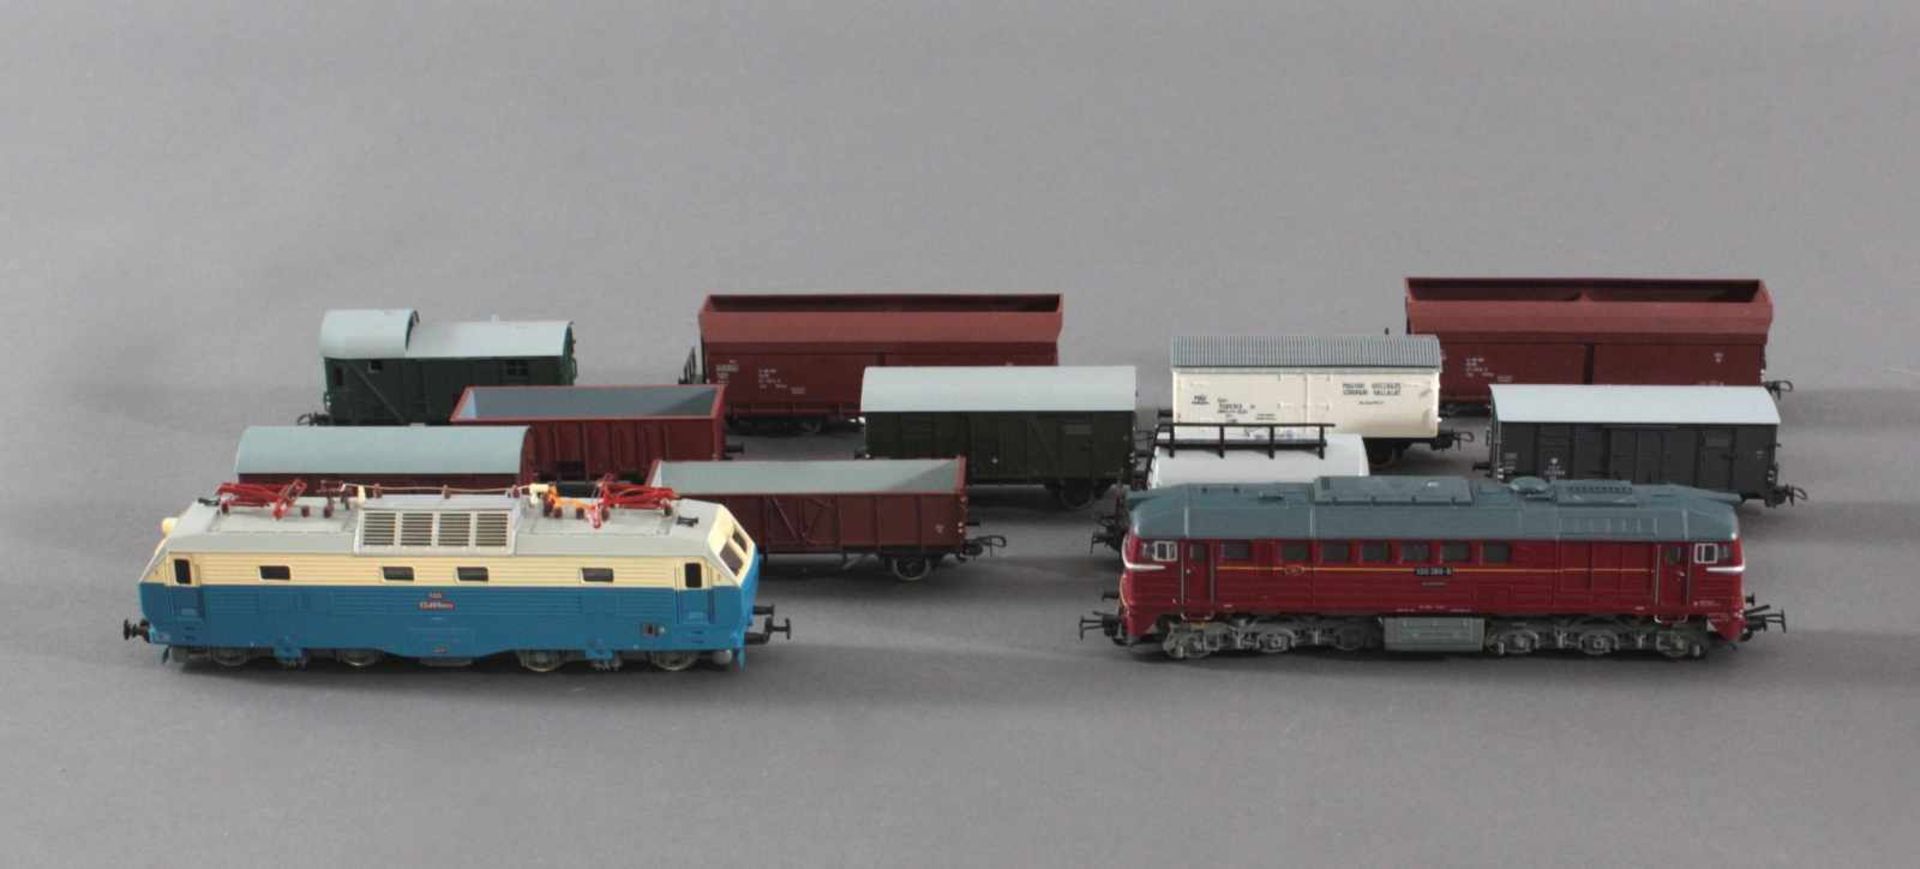 2 Piko Lokomotiven mit 10 Piko Waggons Spur H0Piko BR 120 und ES 499 E-Loks in der